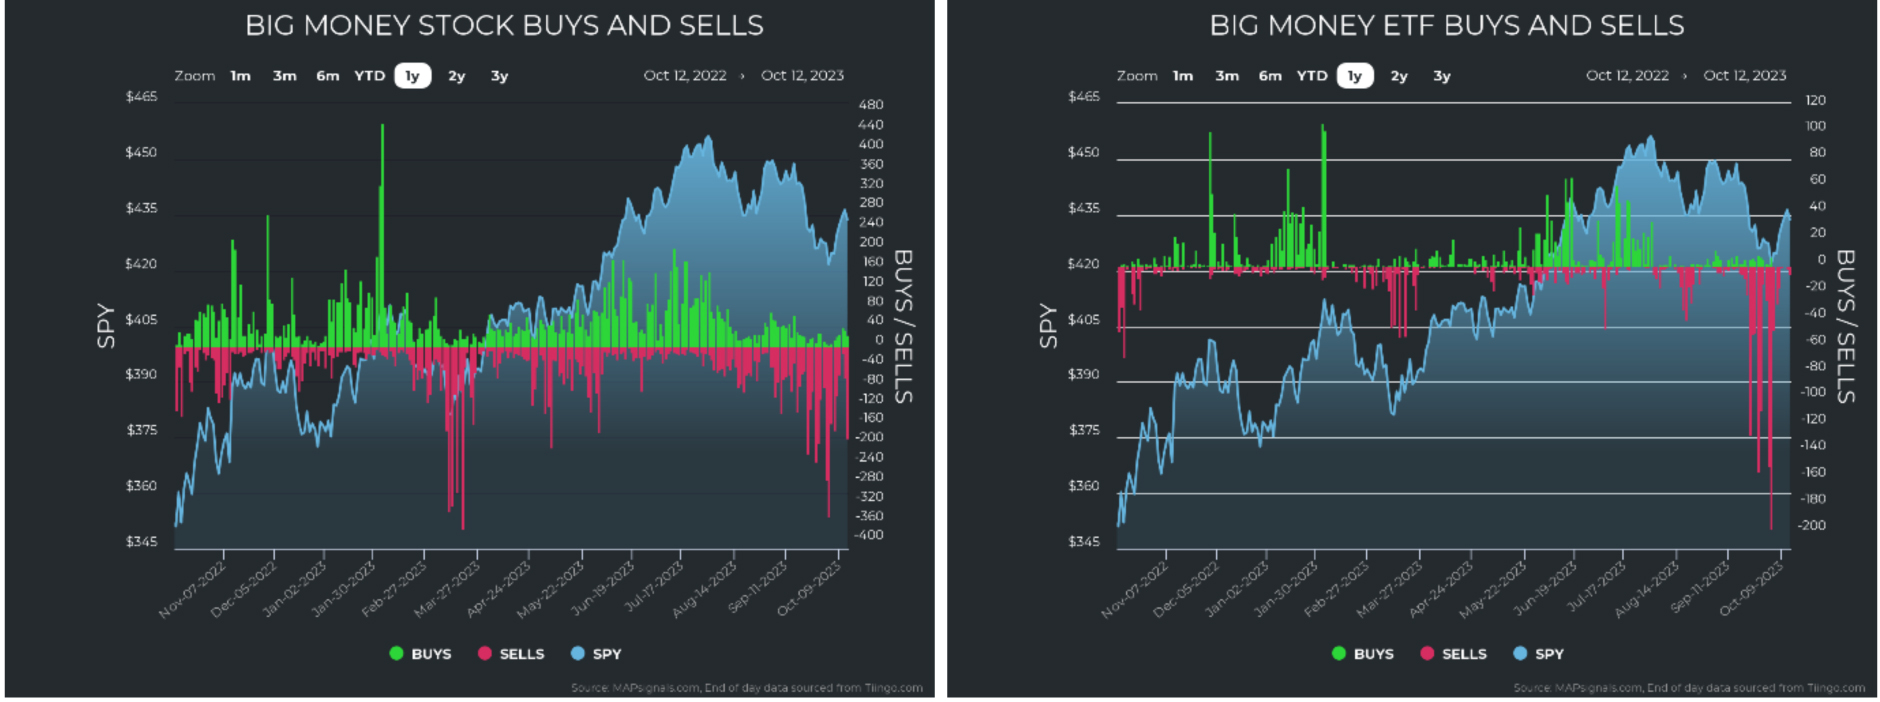 Big Money Stocks ETF Charts